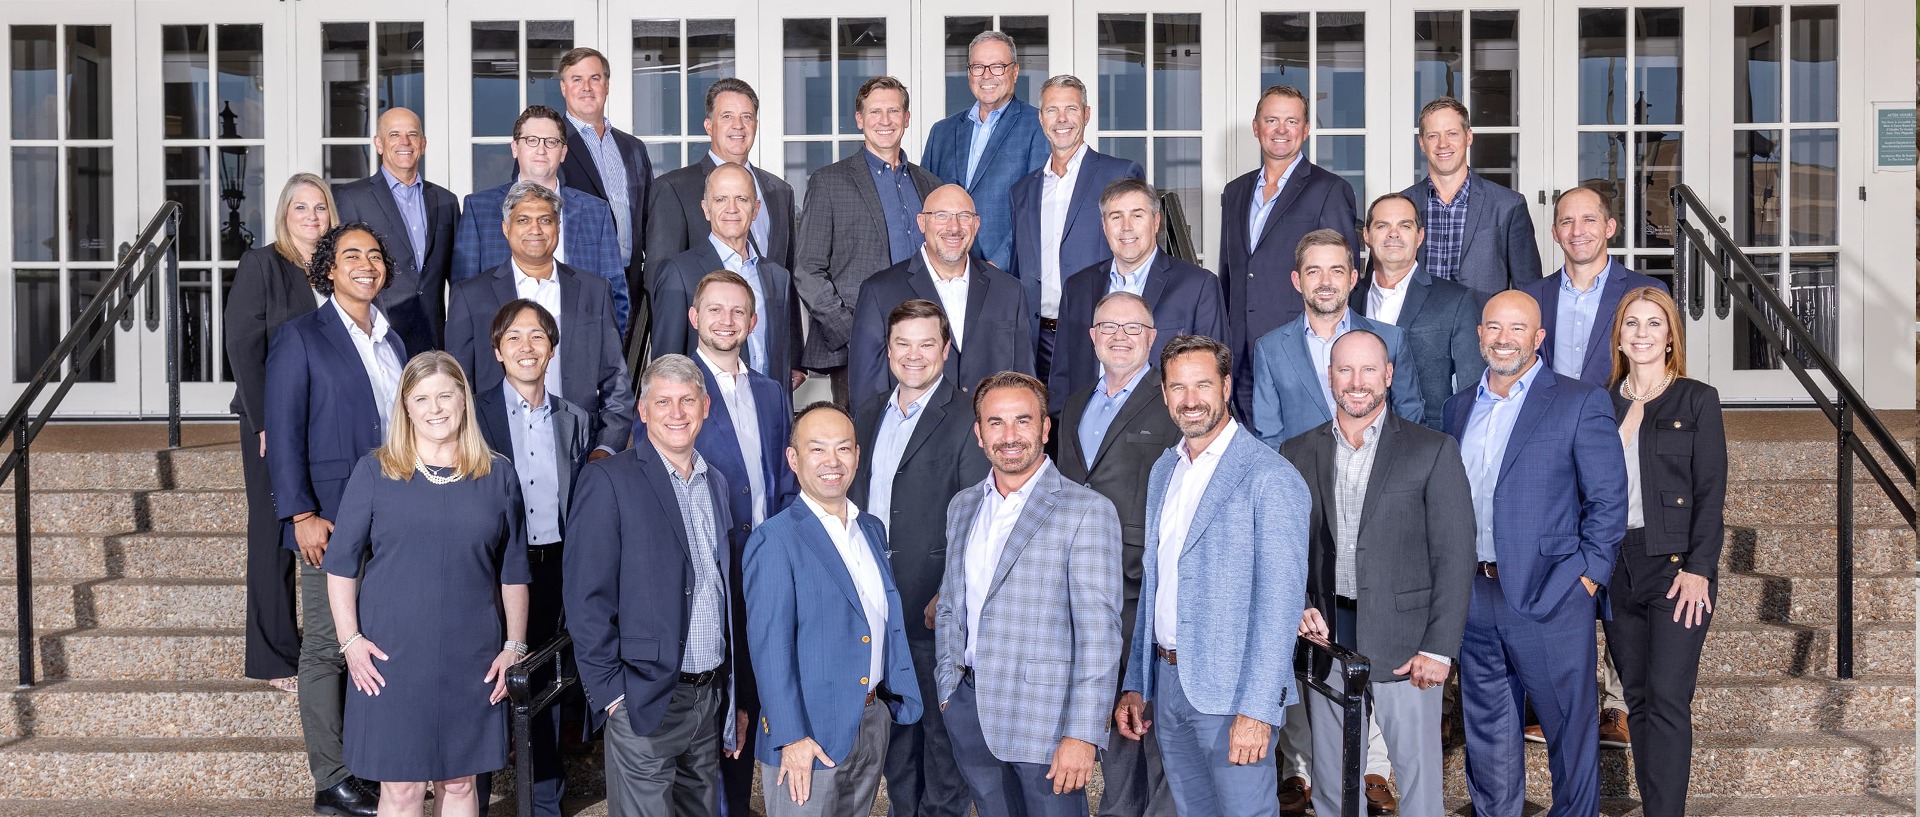 DRB Group executive team photo